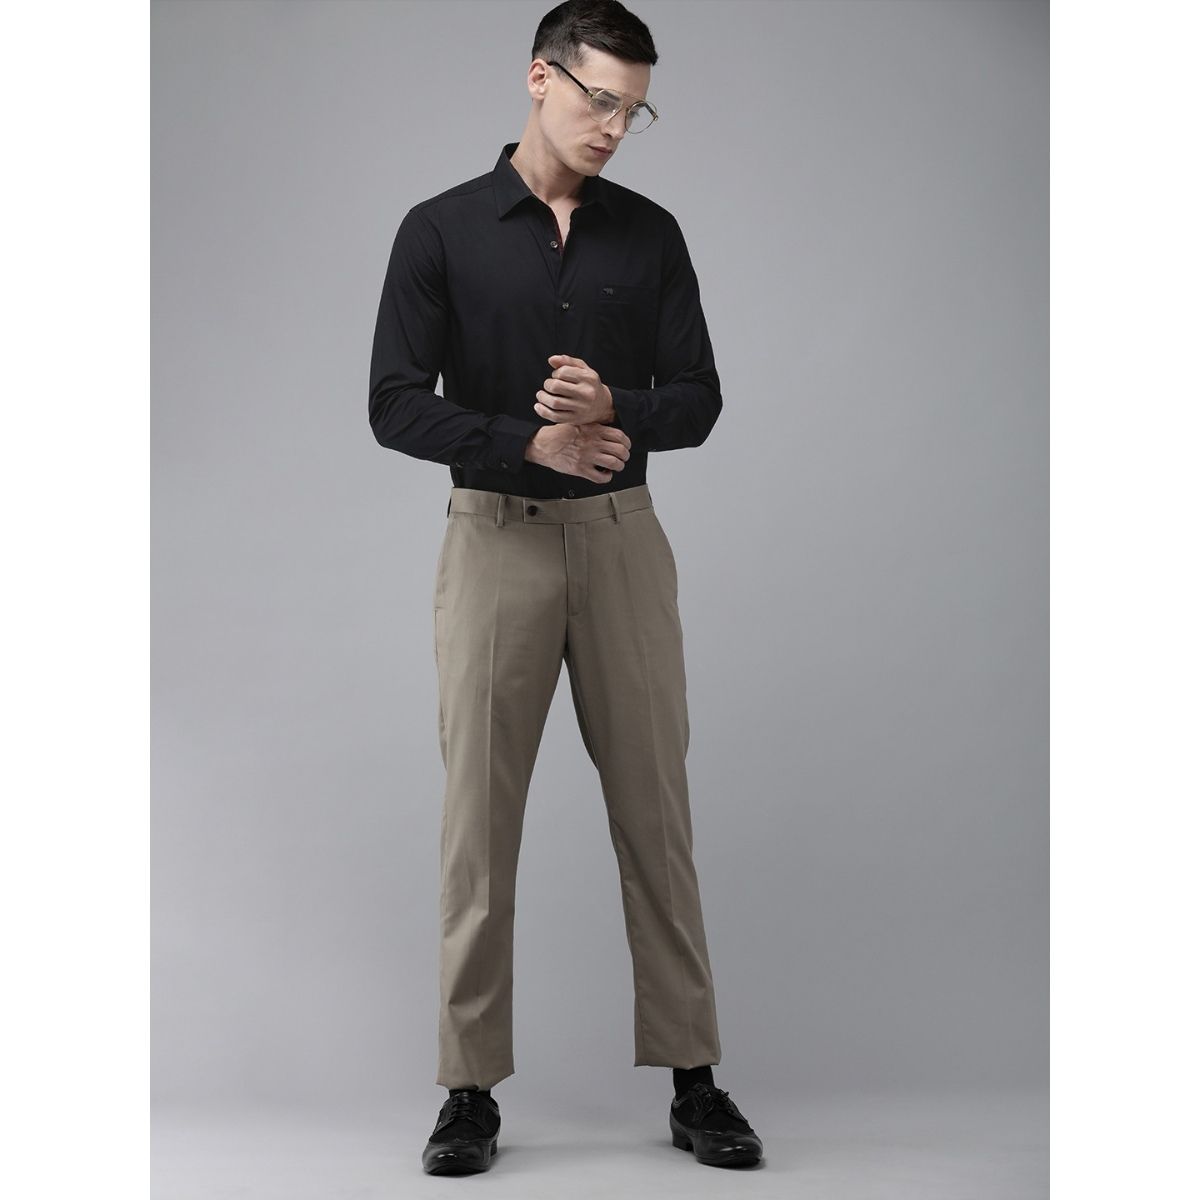 Men's Grey Long Sleeve Shirt, Navy Dress Pants, Dark Brown Woven Leather  Tassel Loafers | Lookastic